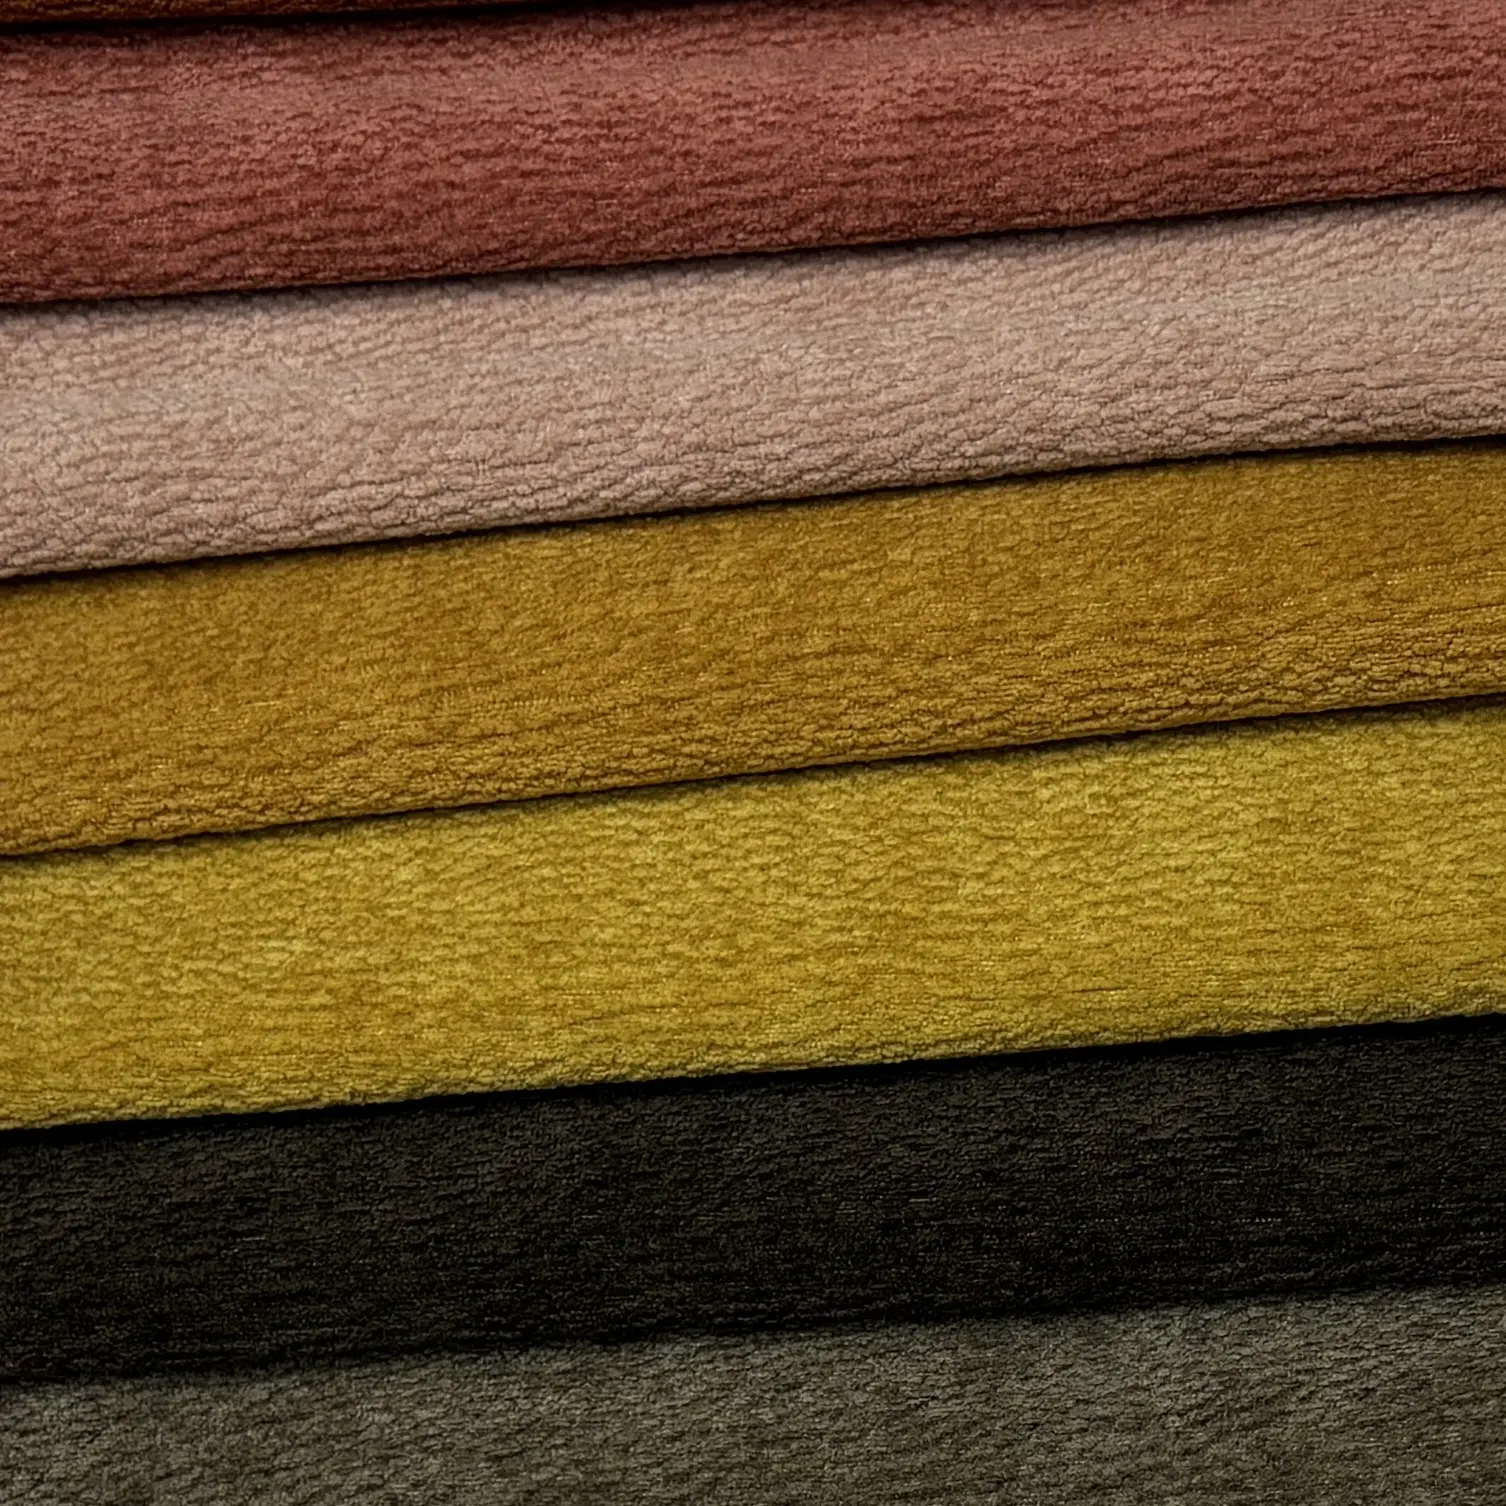 Weipai pabrik profesional grosir kain bahan harga pelapis kain Sofa Chenille untuk kain pakaian Sofa